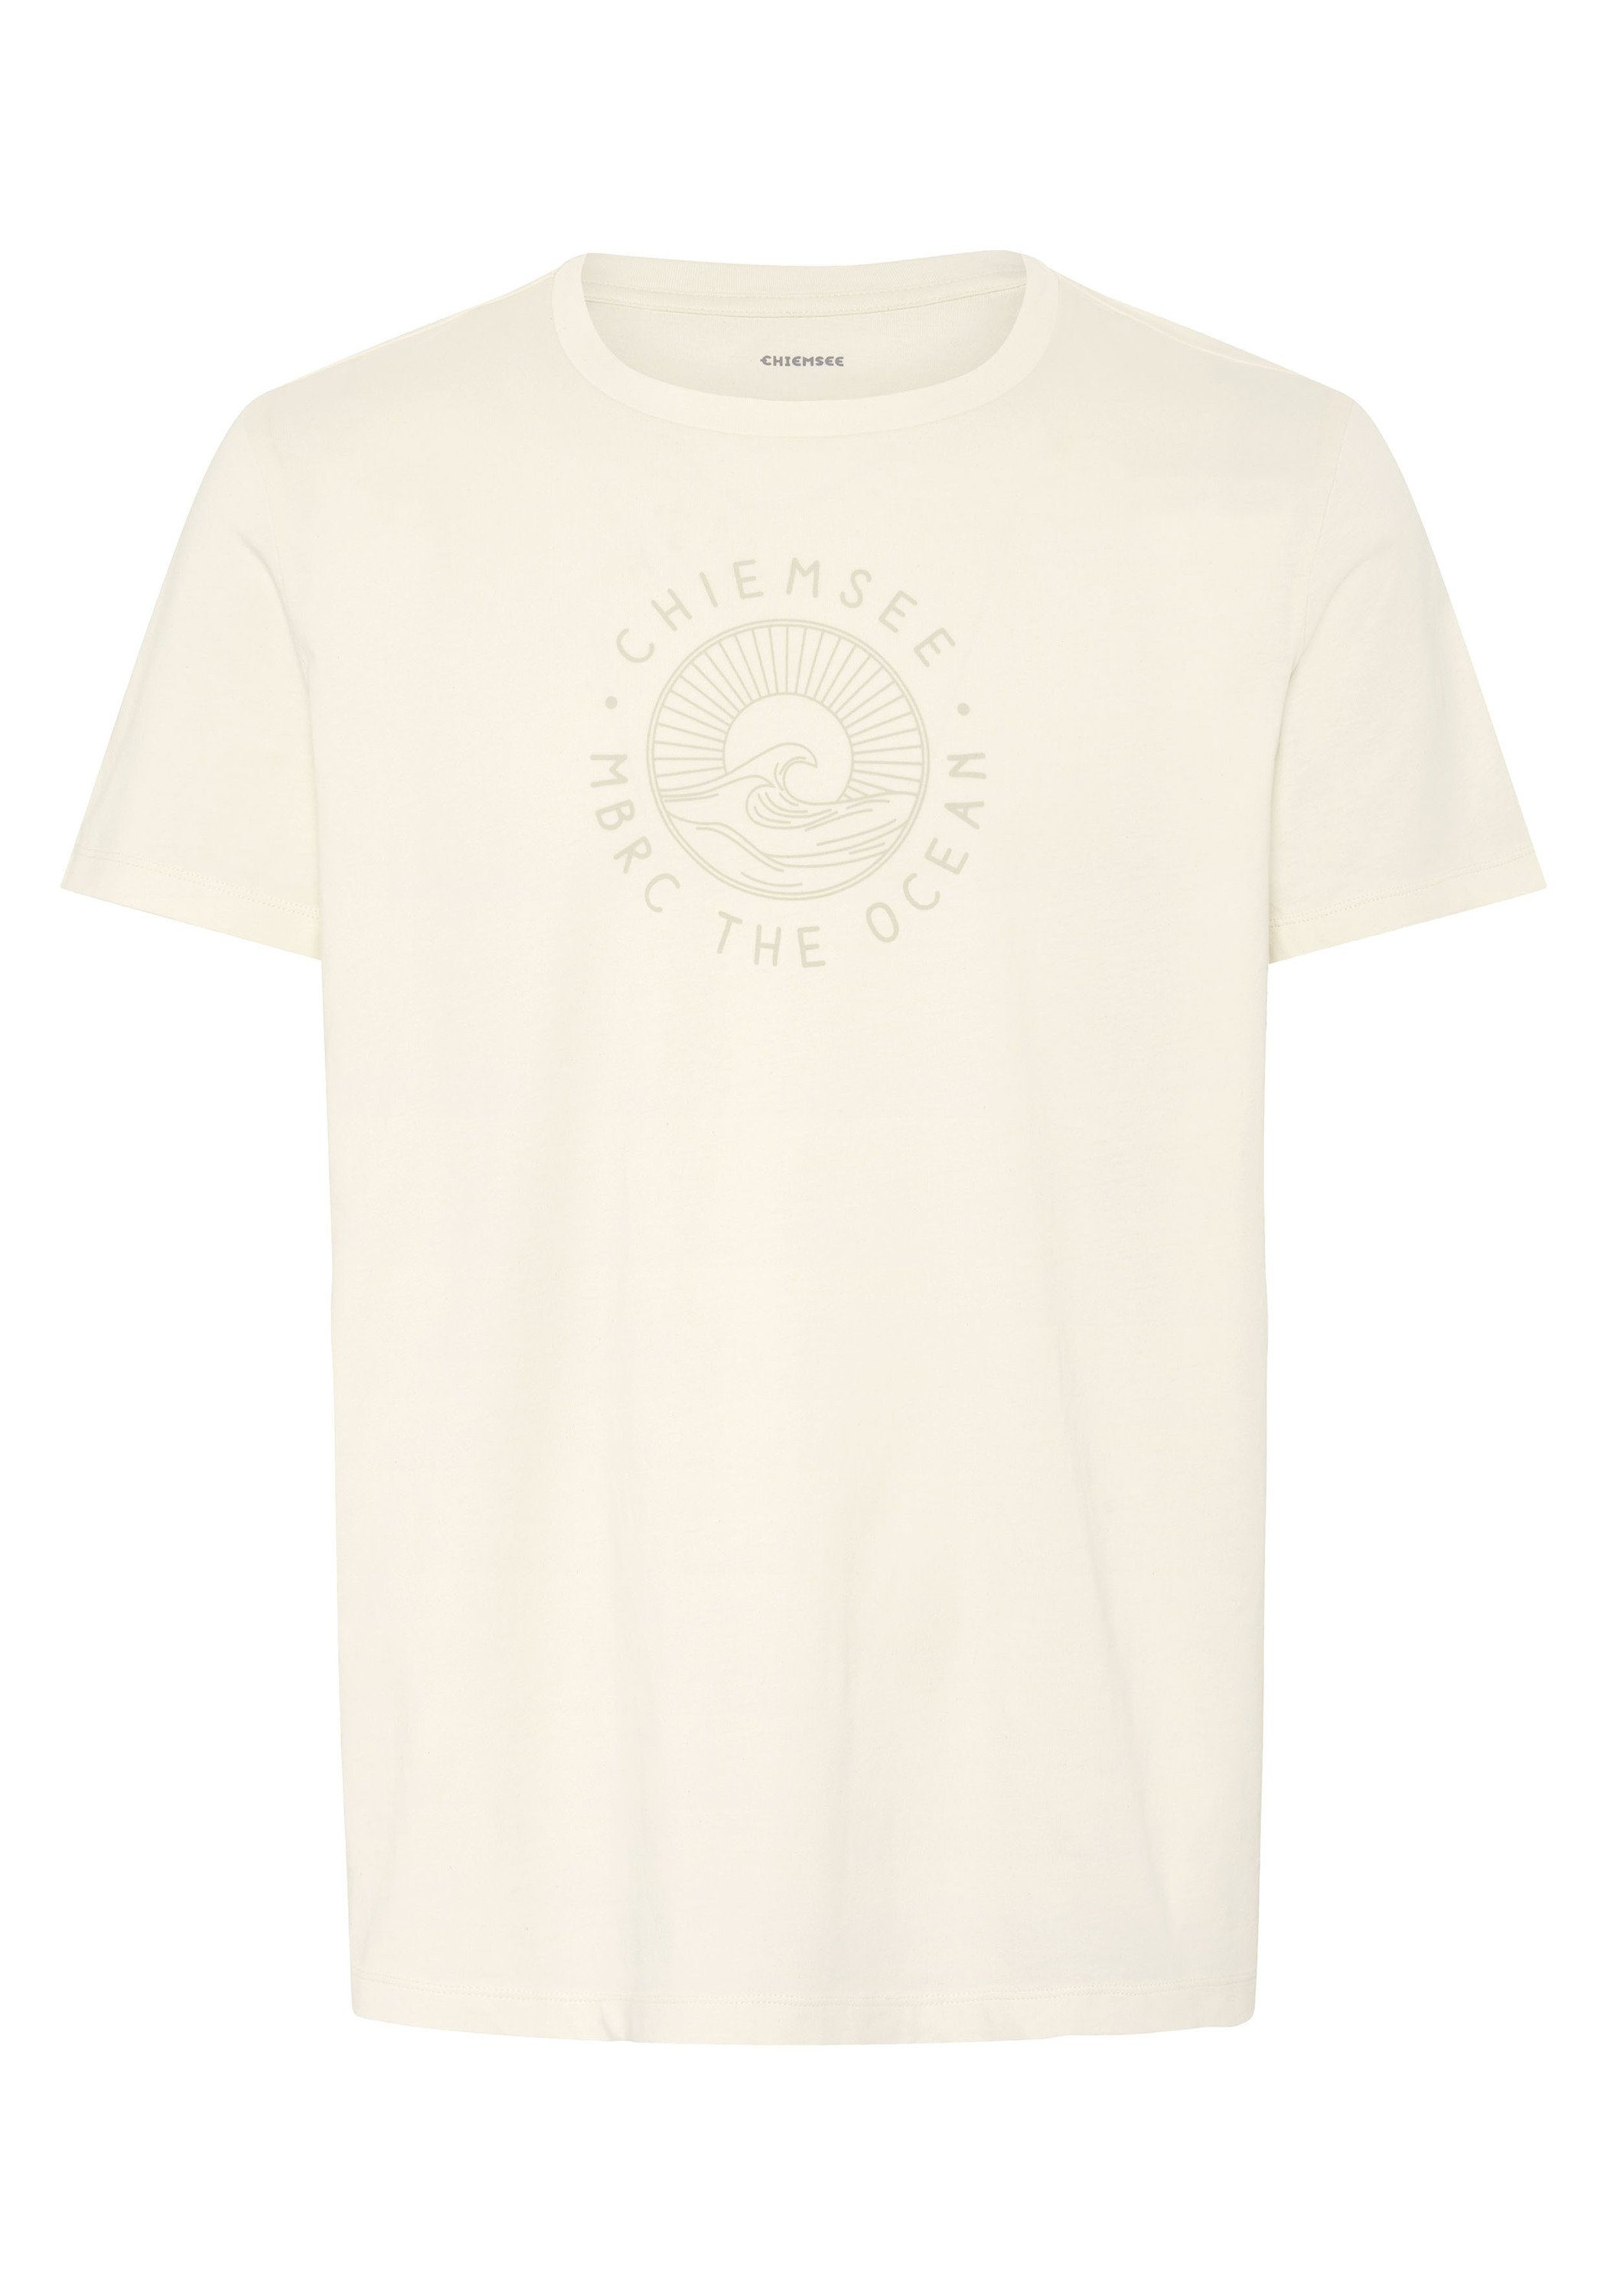 Chiemsee Print-Shirt T-Shirt mit Wellenmotiv 1 12 Natural